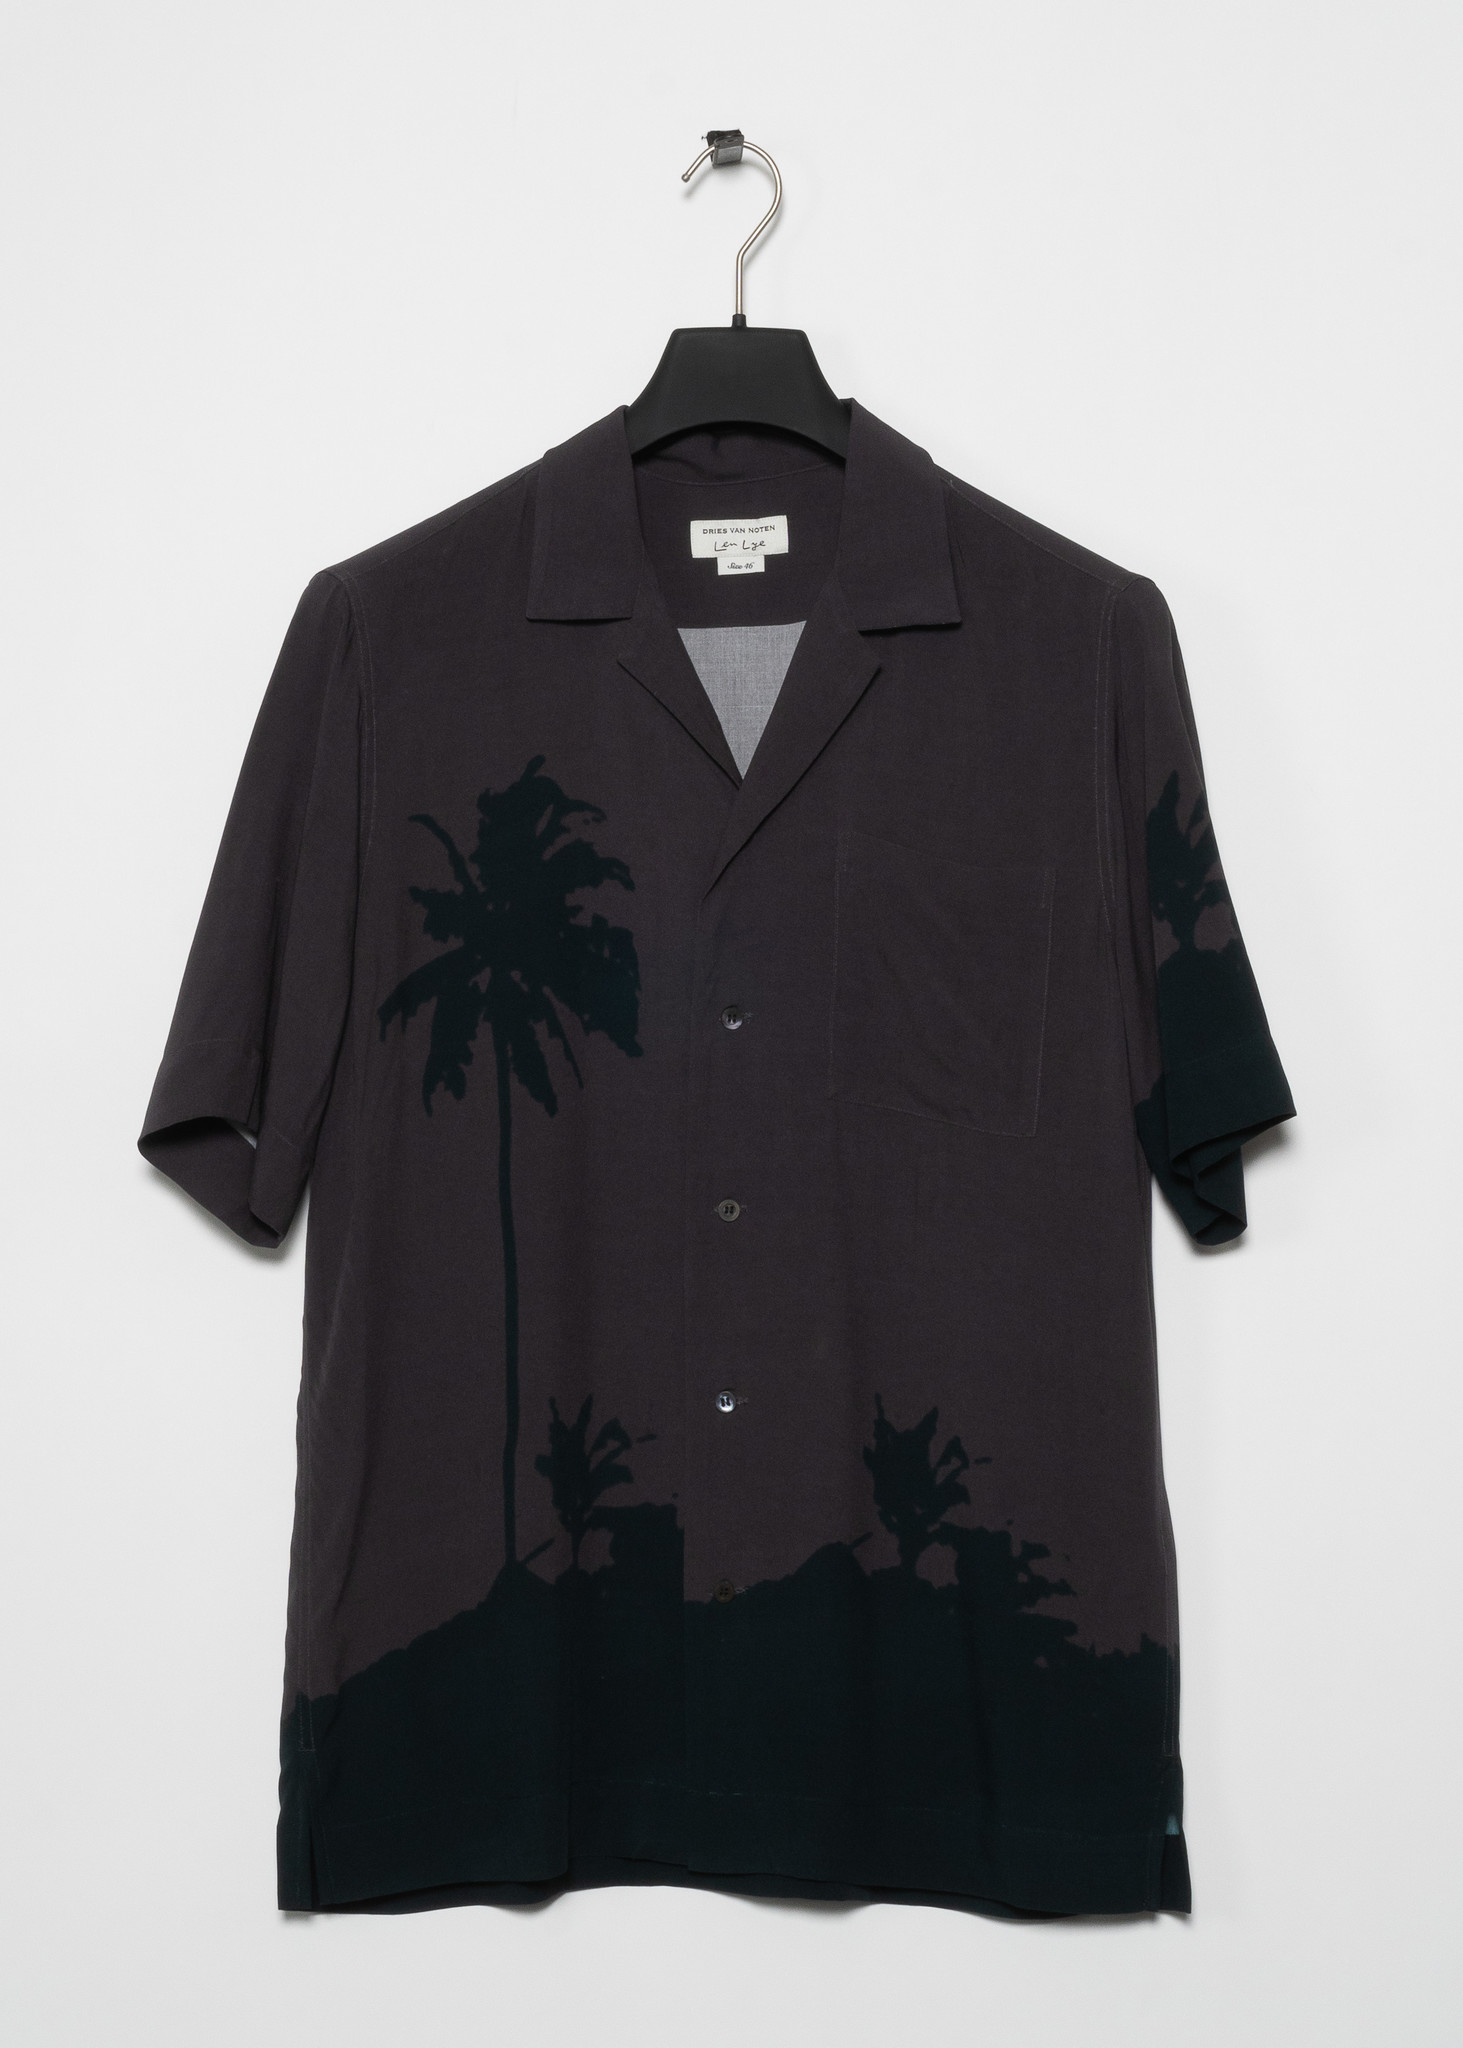 Dries Van Noten: Grey Len Lye Edition Graphic Short Sleeve Shirt